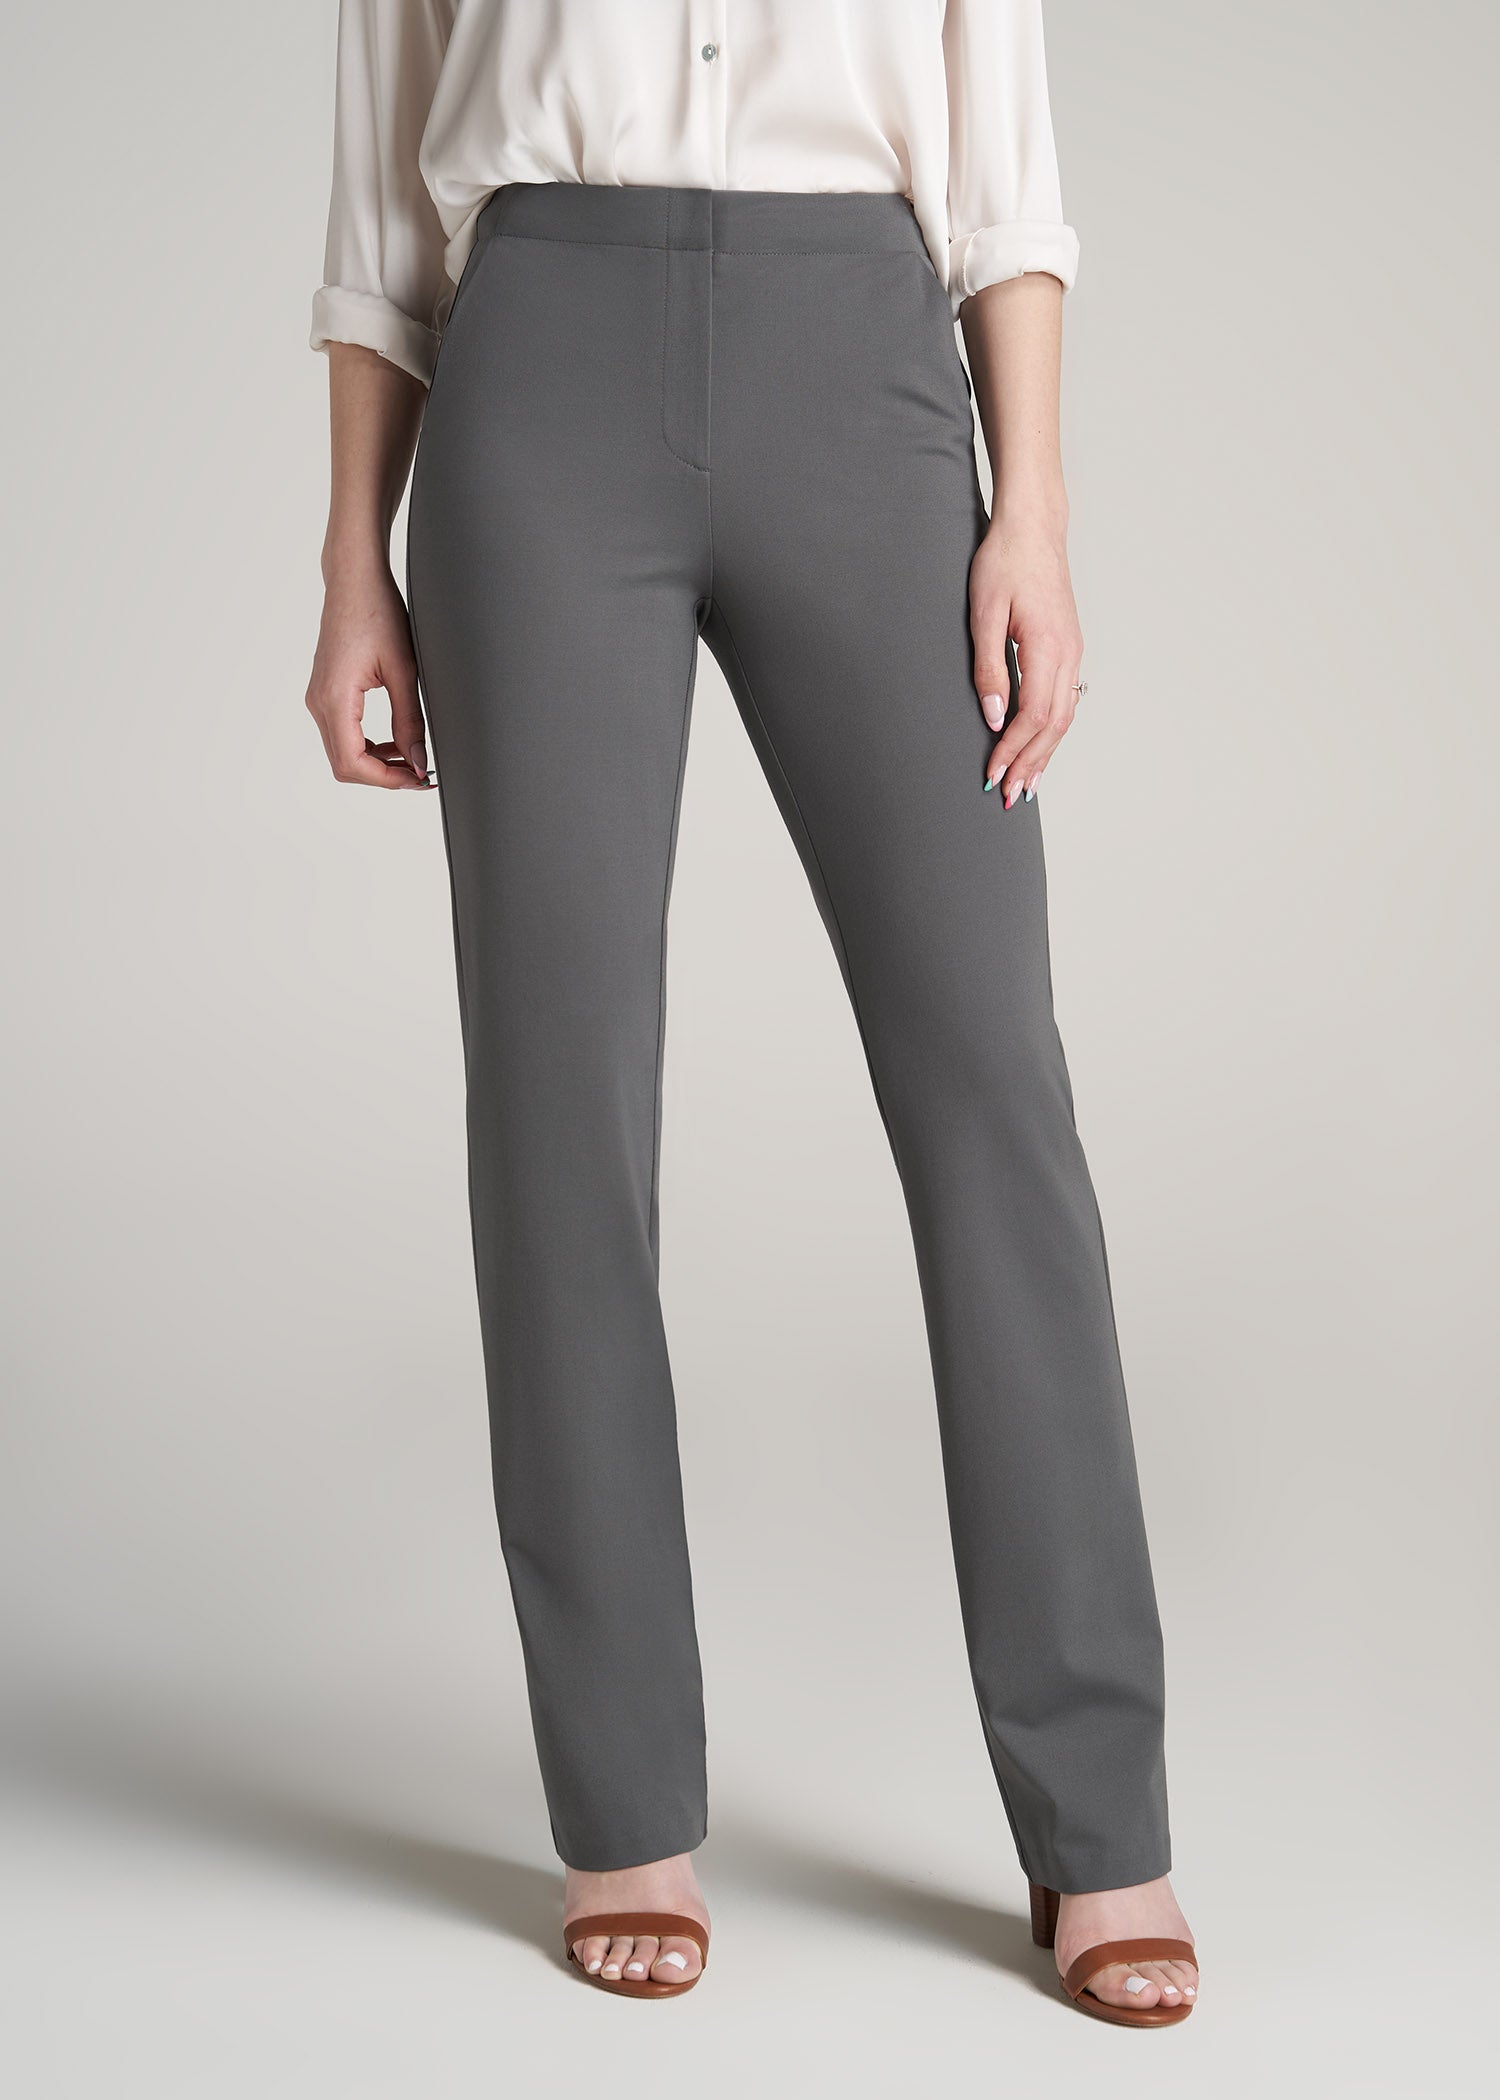 Grey Trouser & Dress Pants for Women